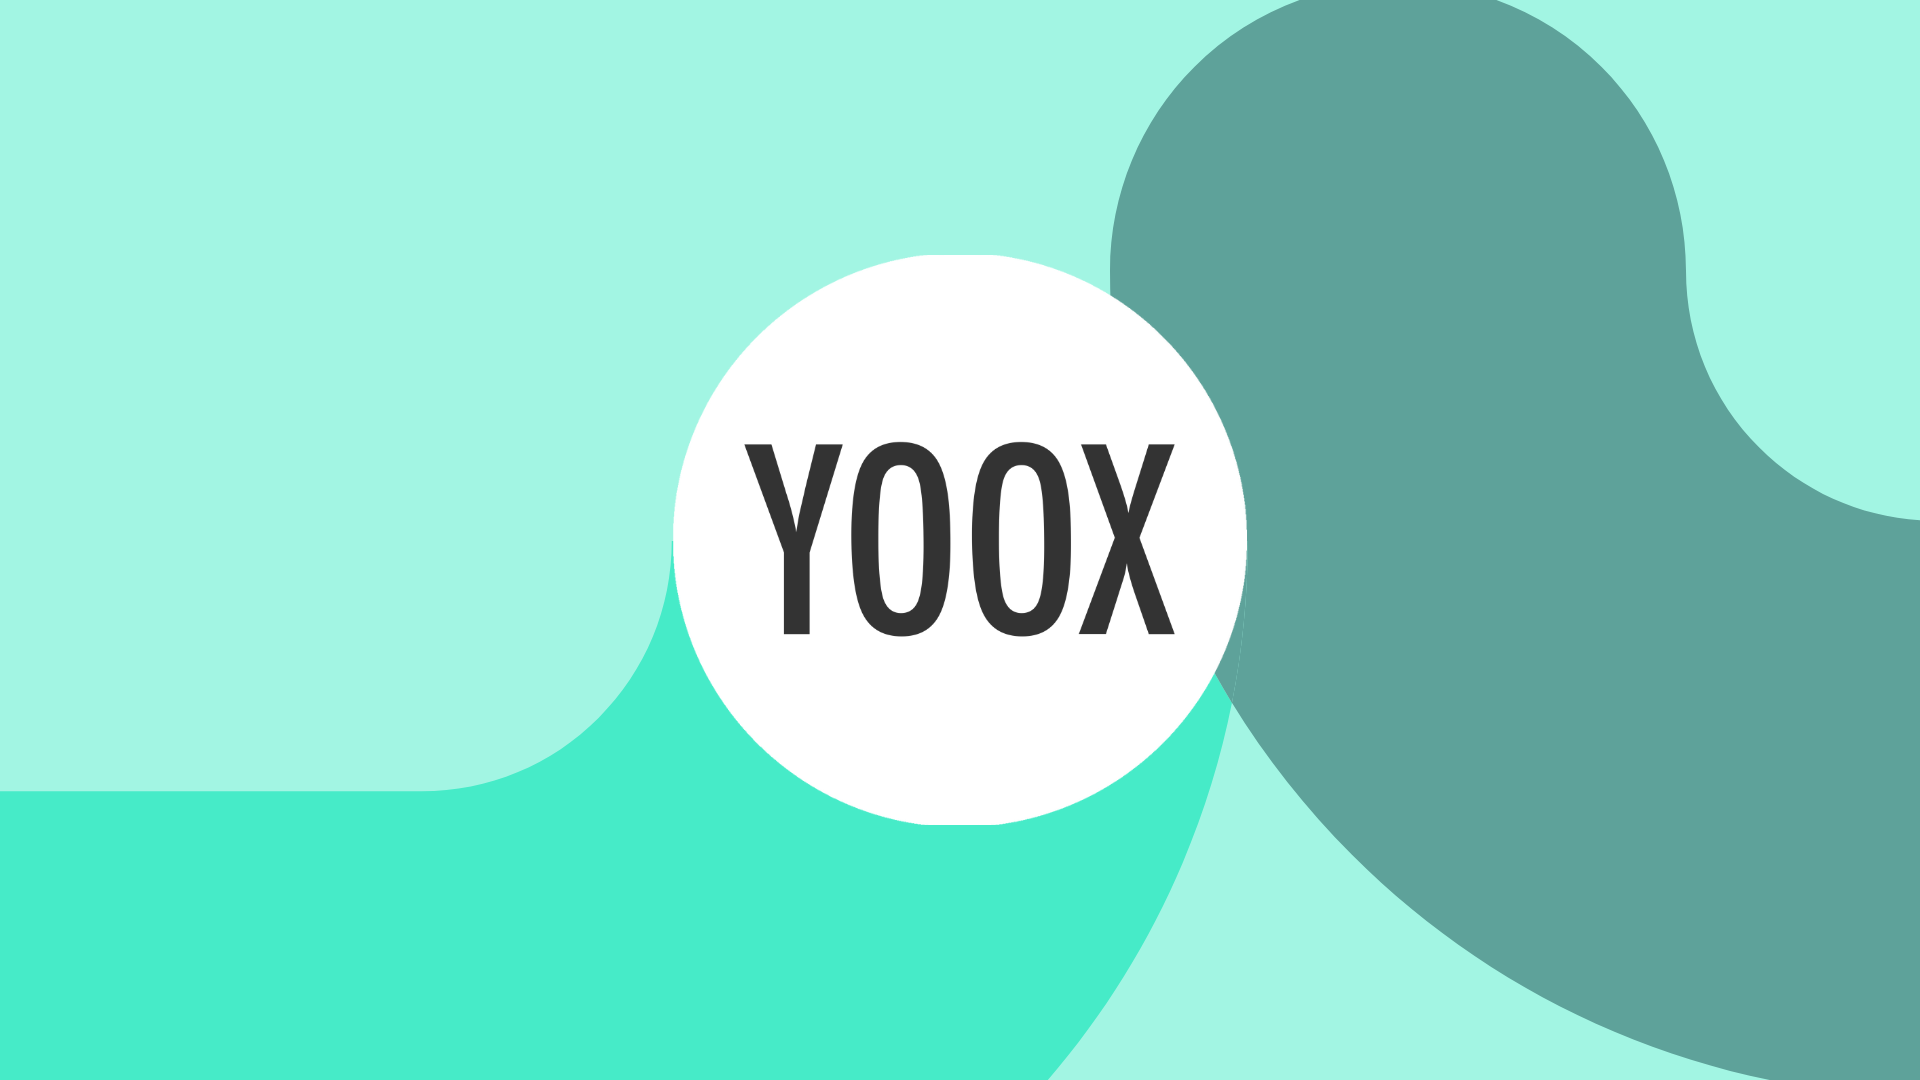 Yoox - fashion marketplace